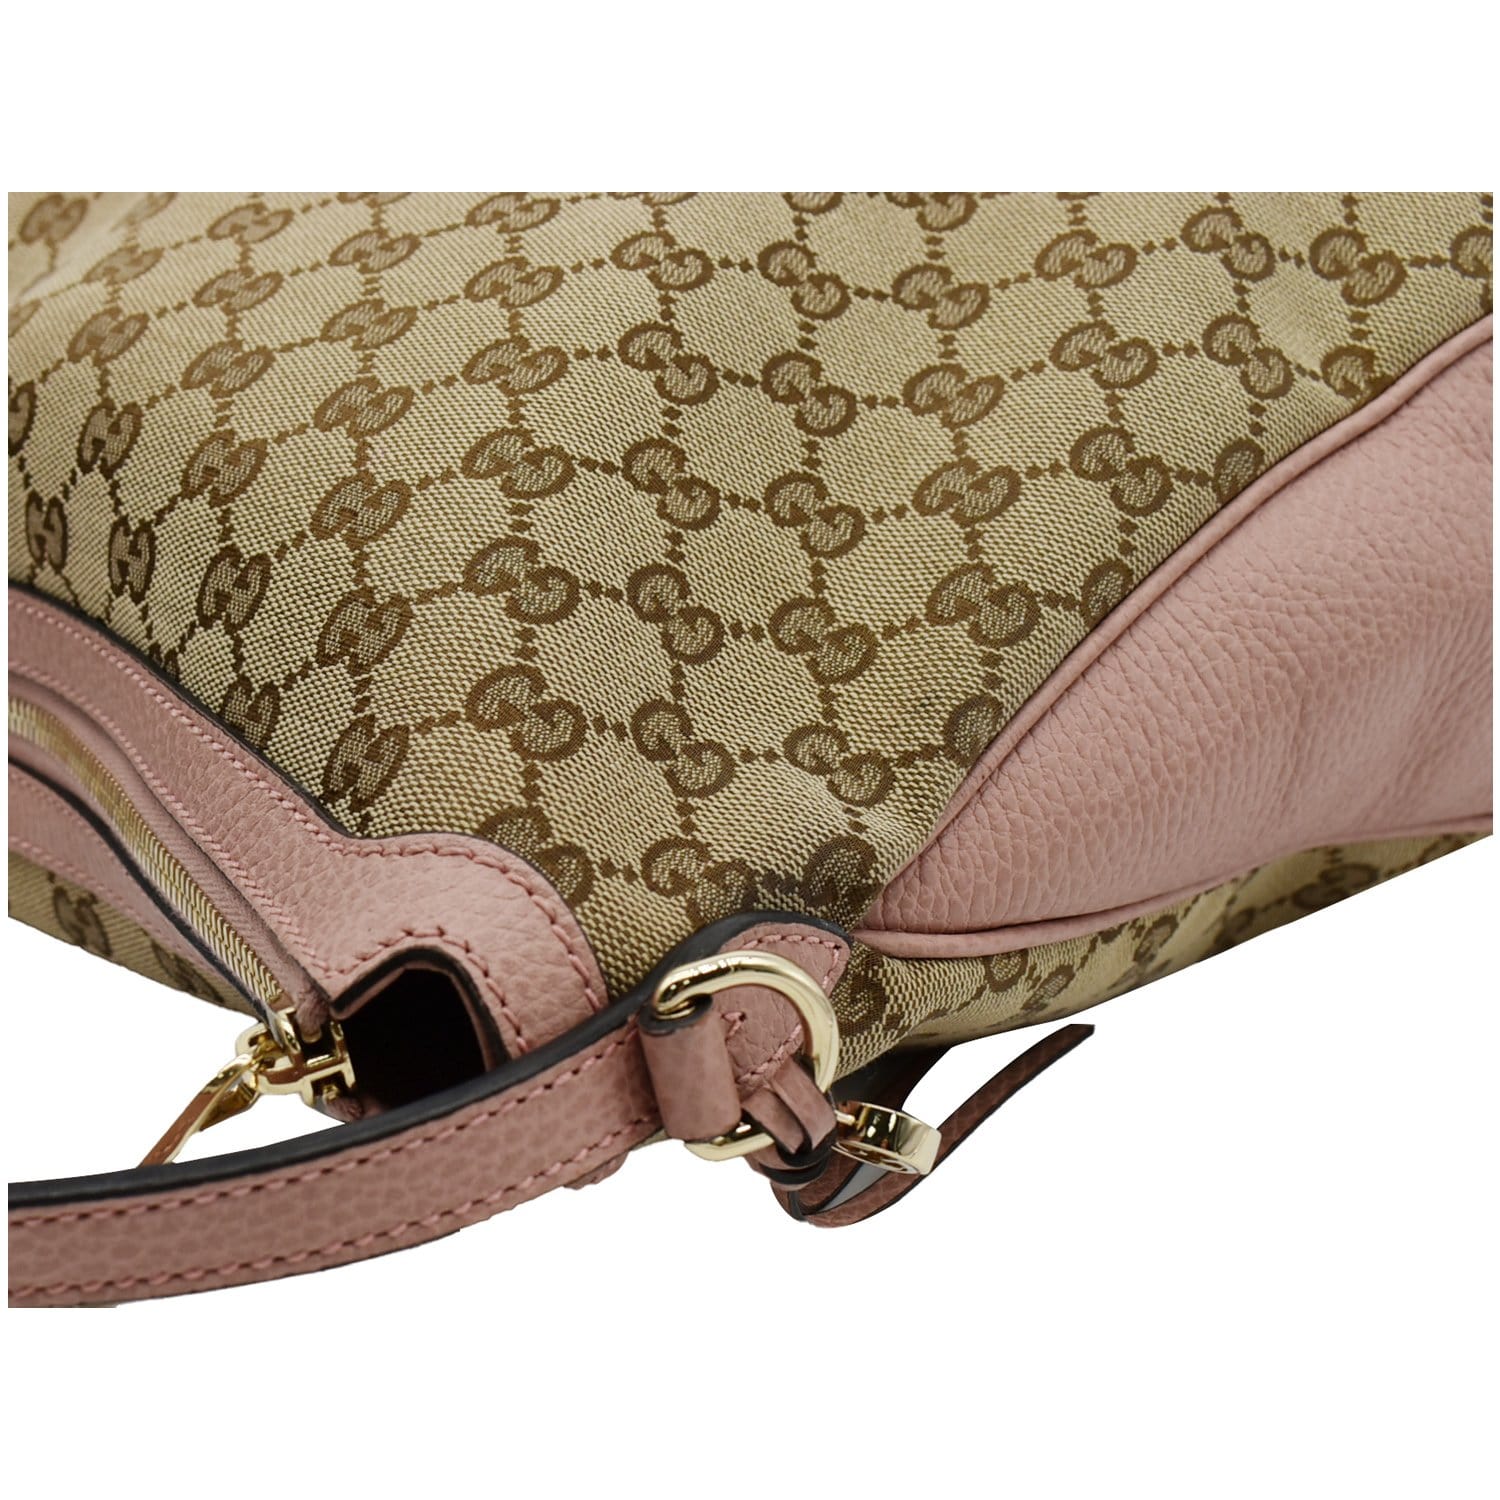 Gucci Original GG Bree Canvas Leather Hobo Handbag